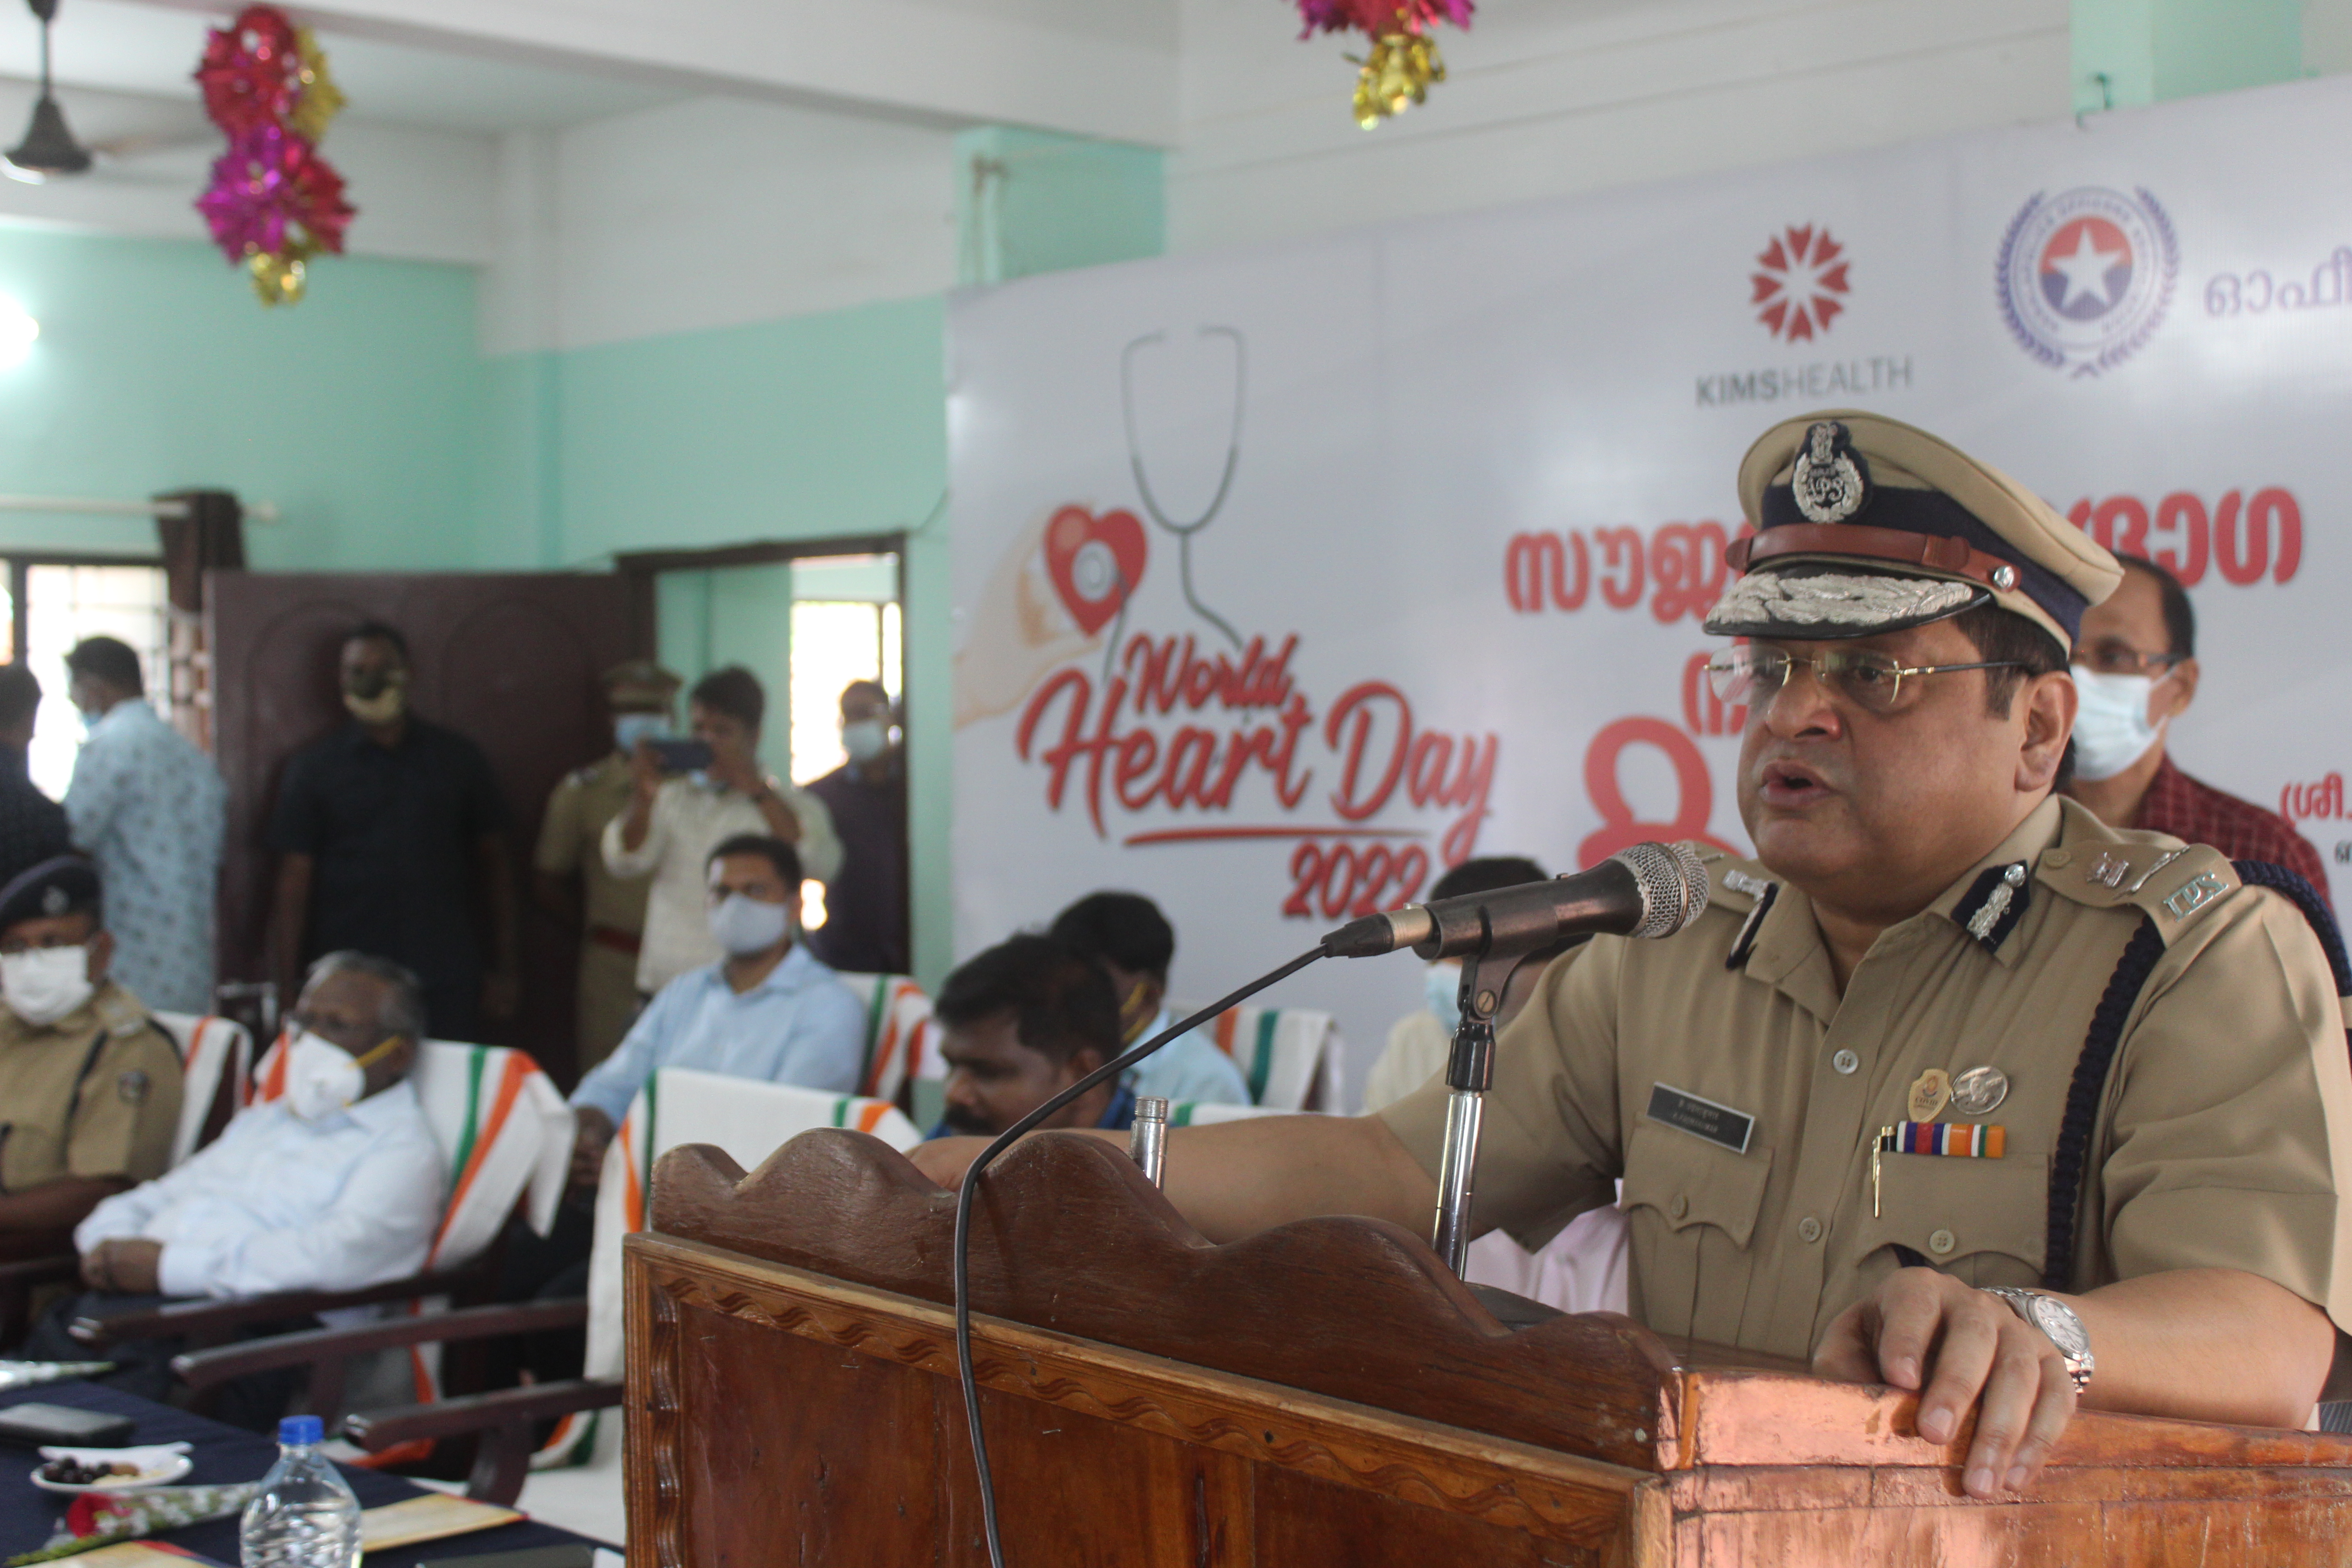 KIMSHEALTH organized cardiology medical camp at Nandavanam Police camp